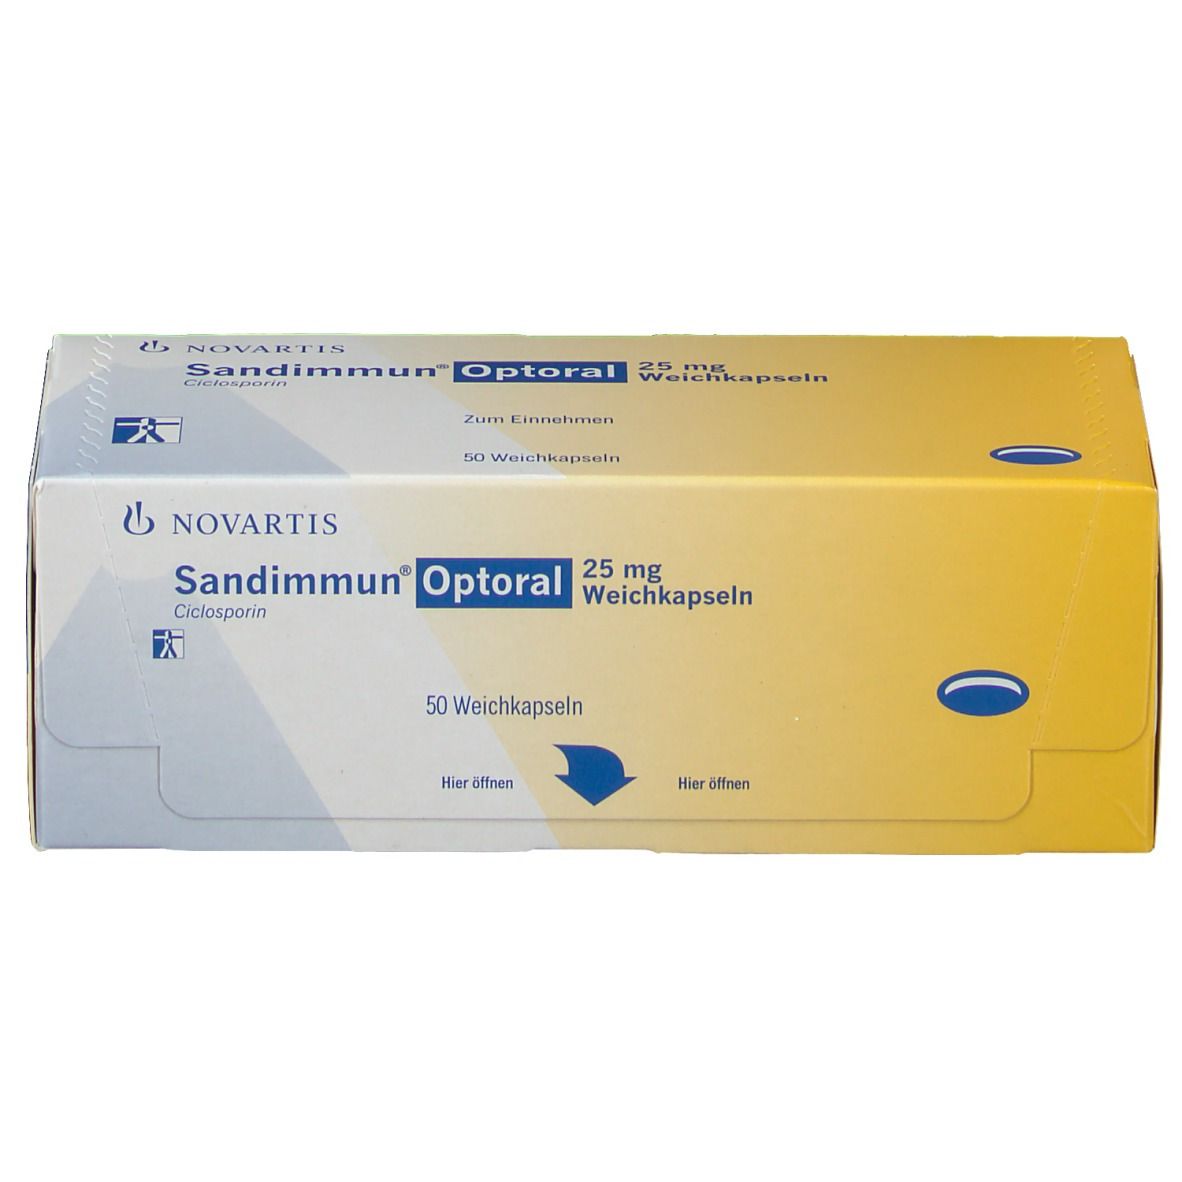 Sandimmun® Optoral 25 mg